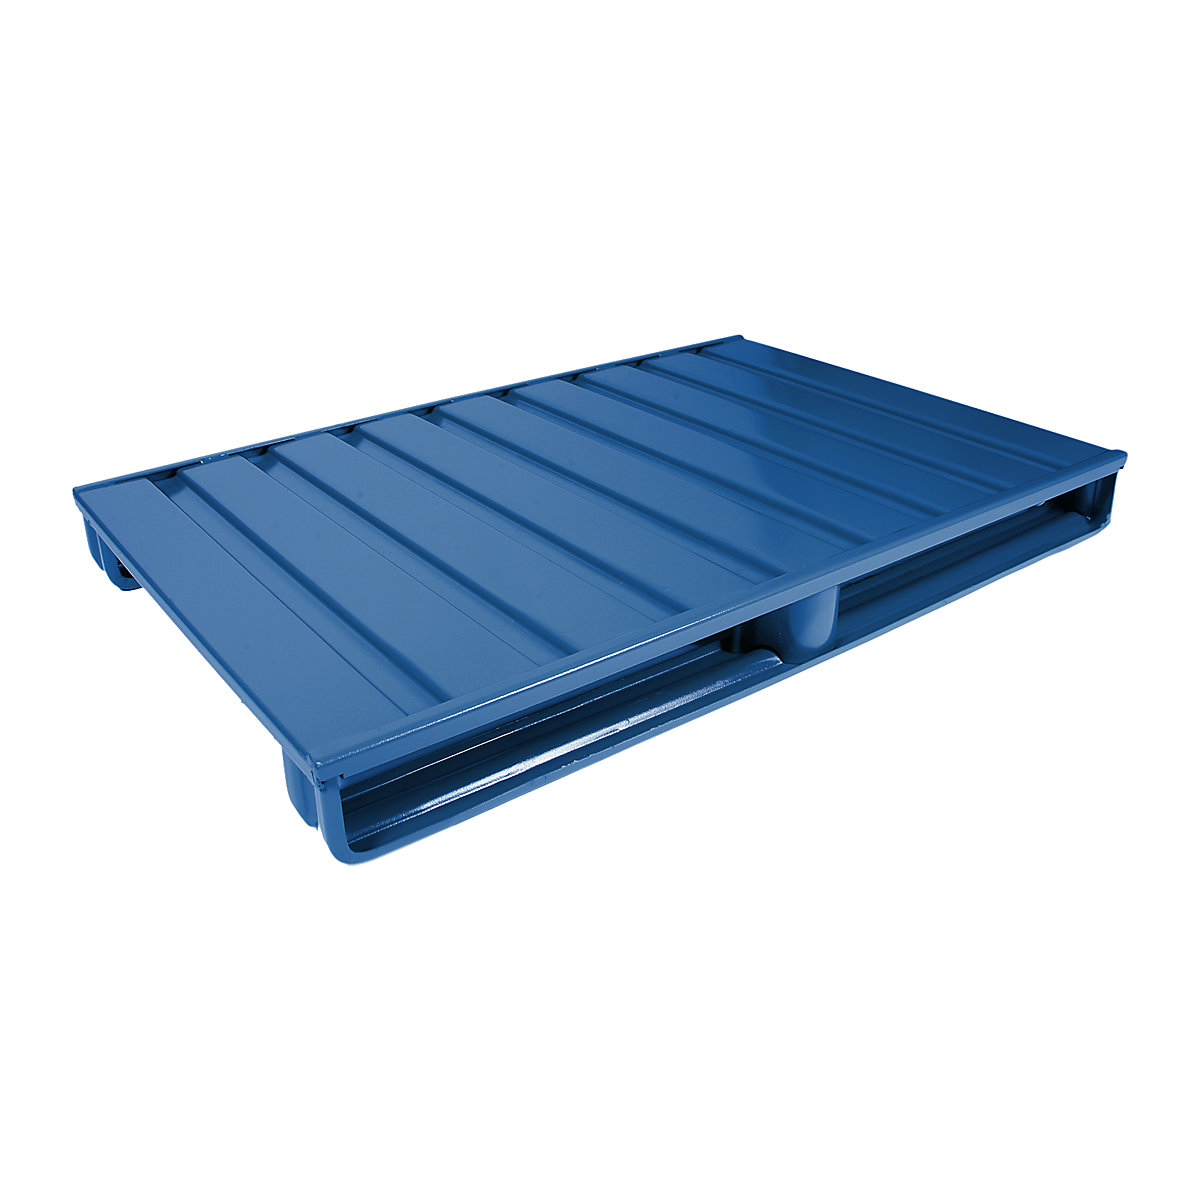 Palet plano de acero – Heson, L x A 1200 x 800 mm, carga máx. 2000 kg, azul genciana-2